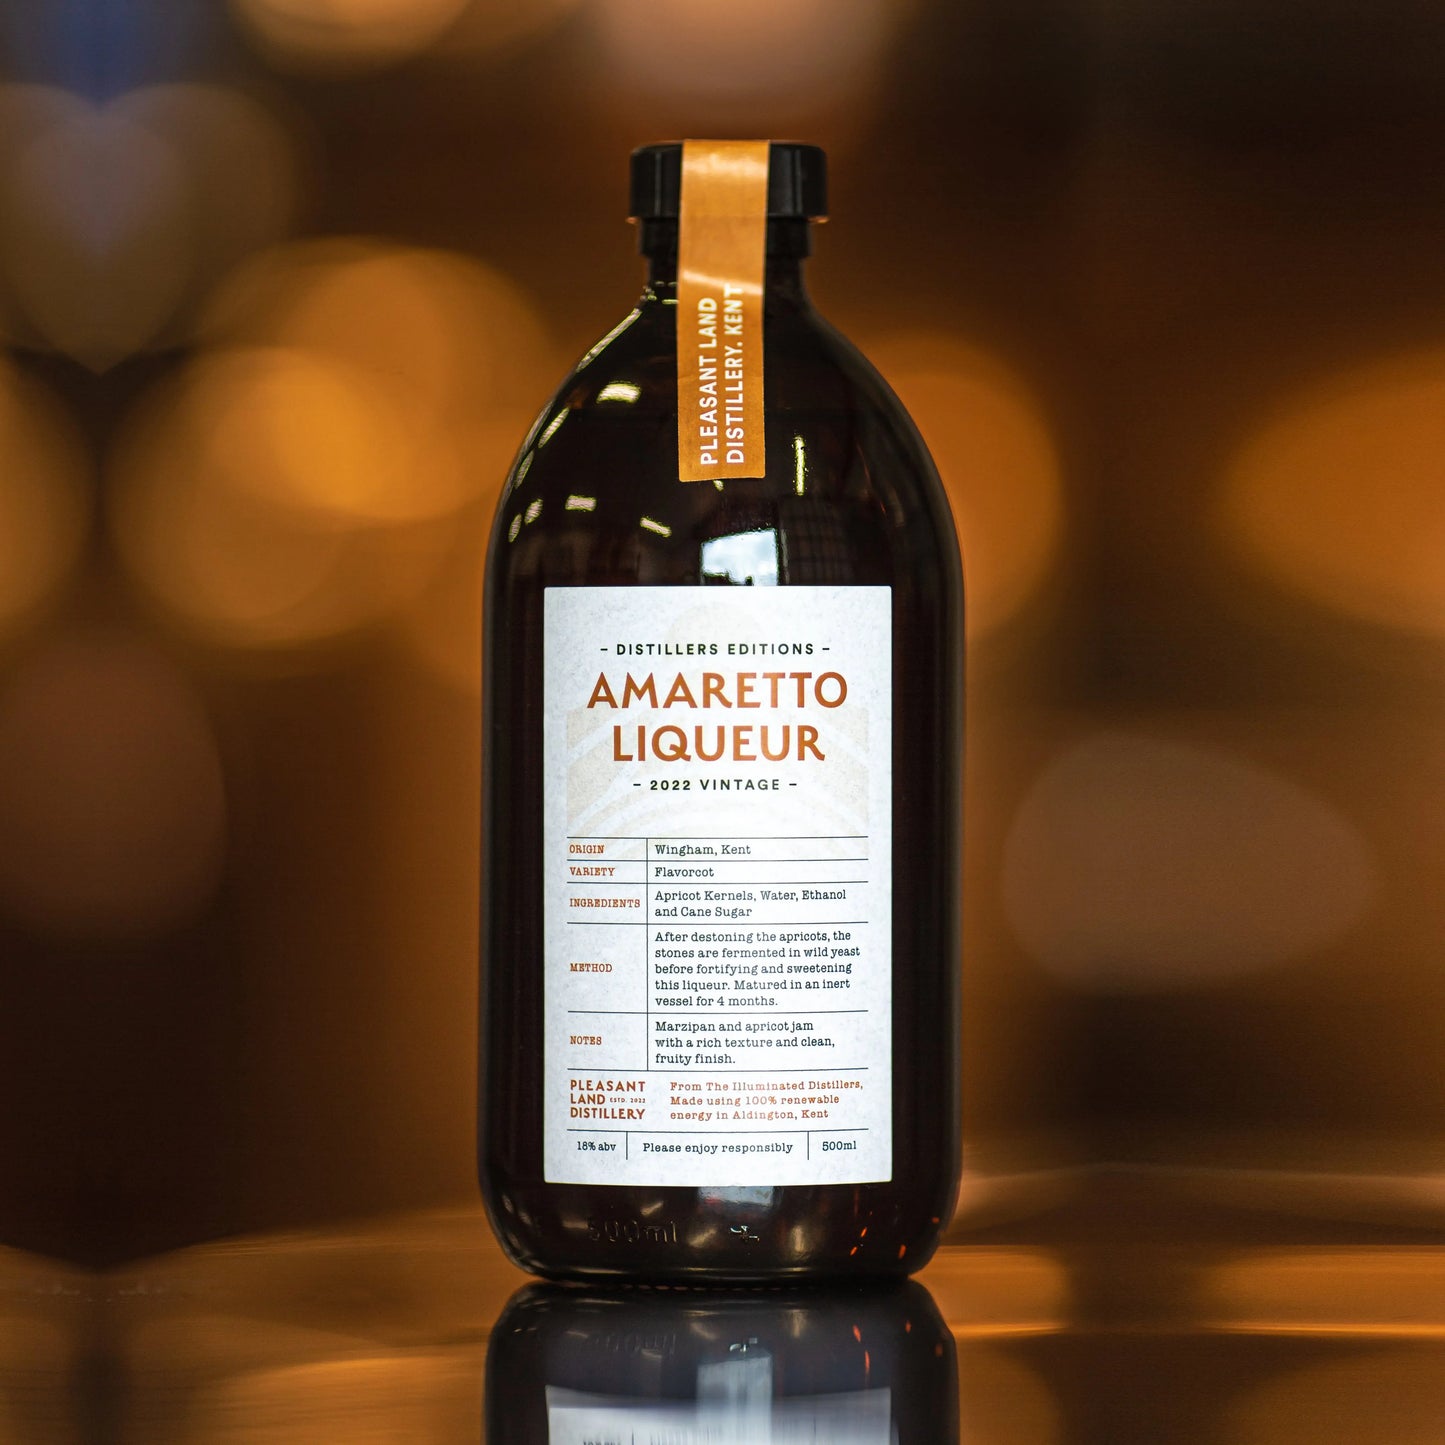 Amaretto Liqueur Pleasant Land Distillery